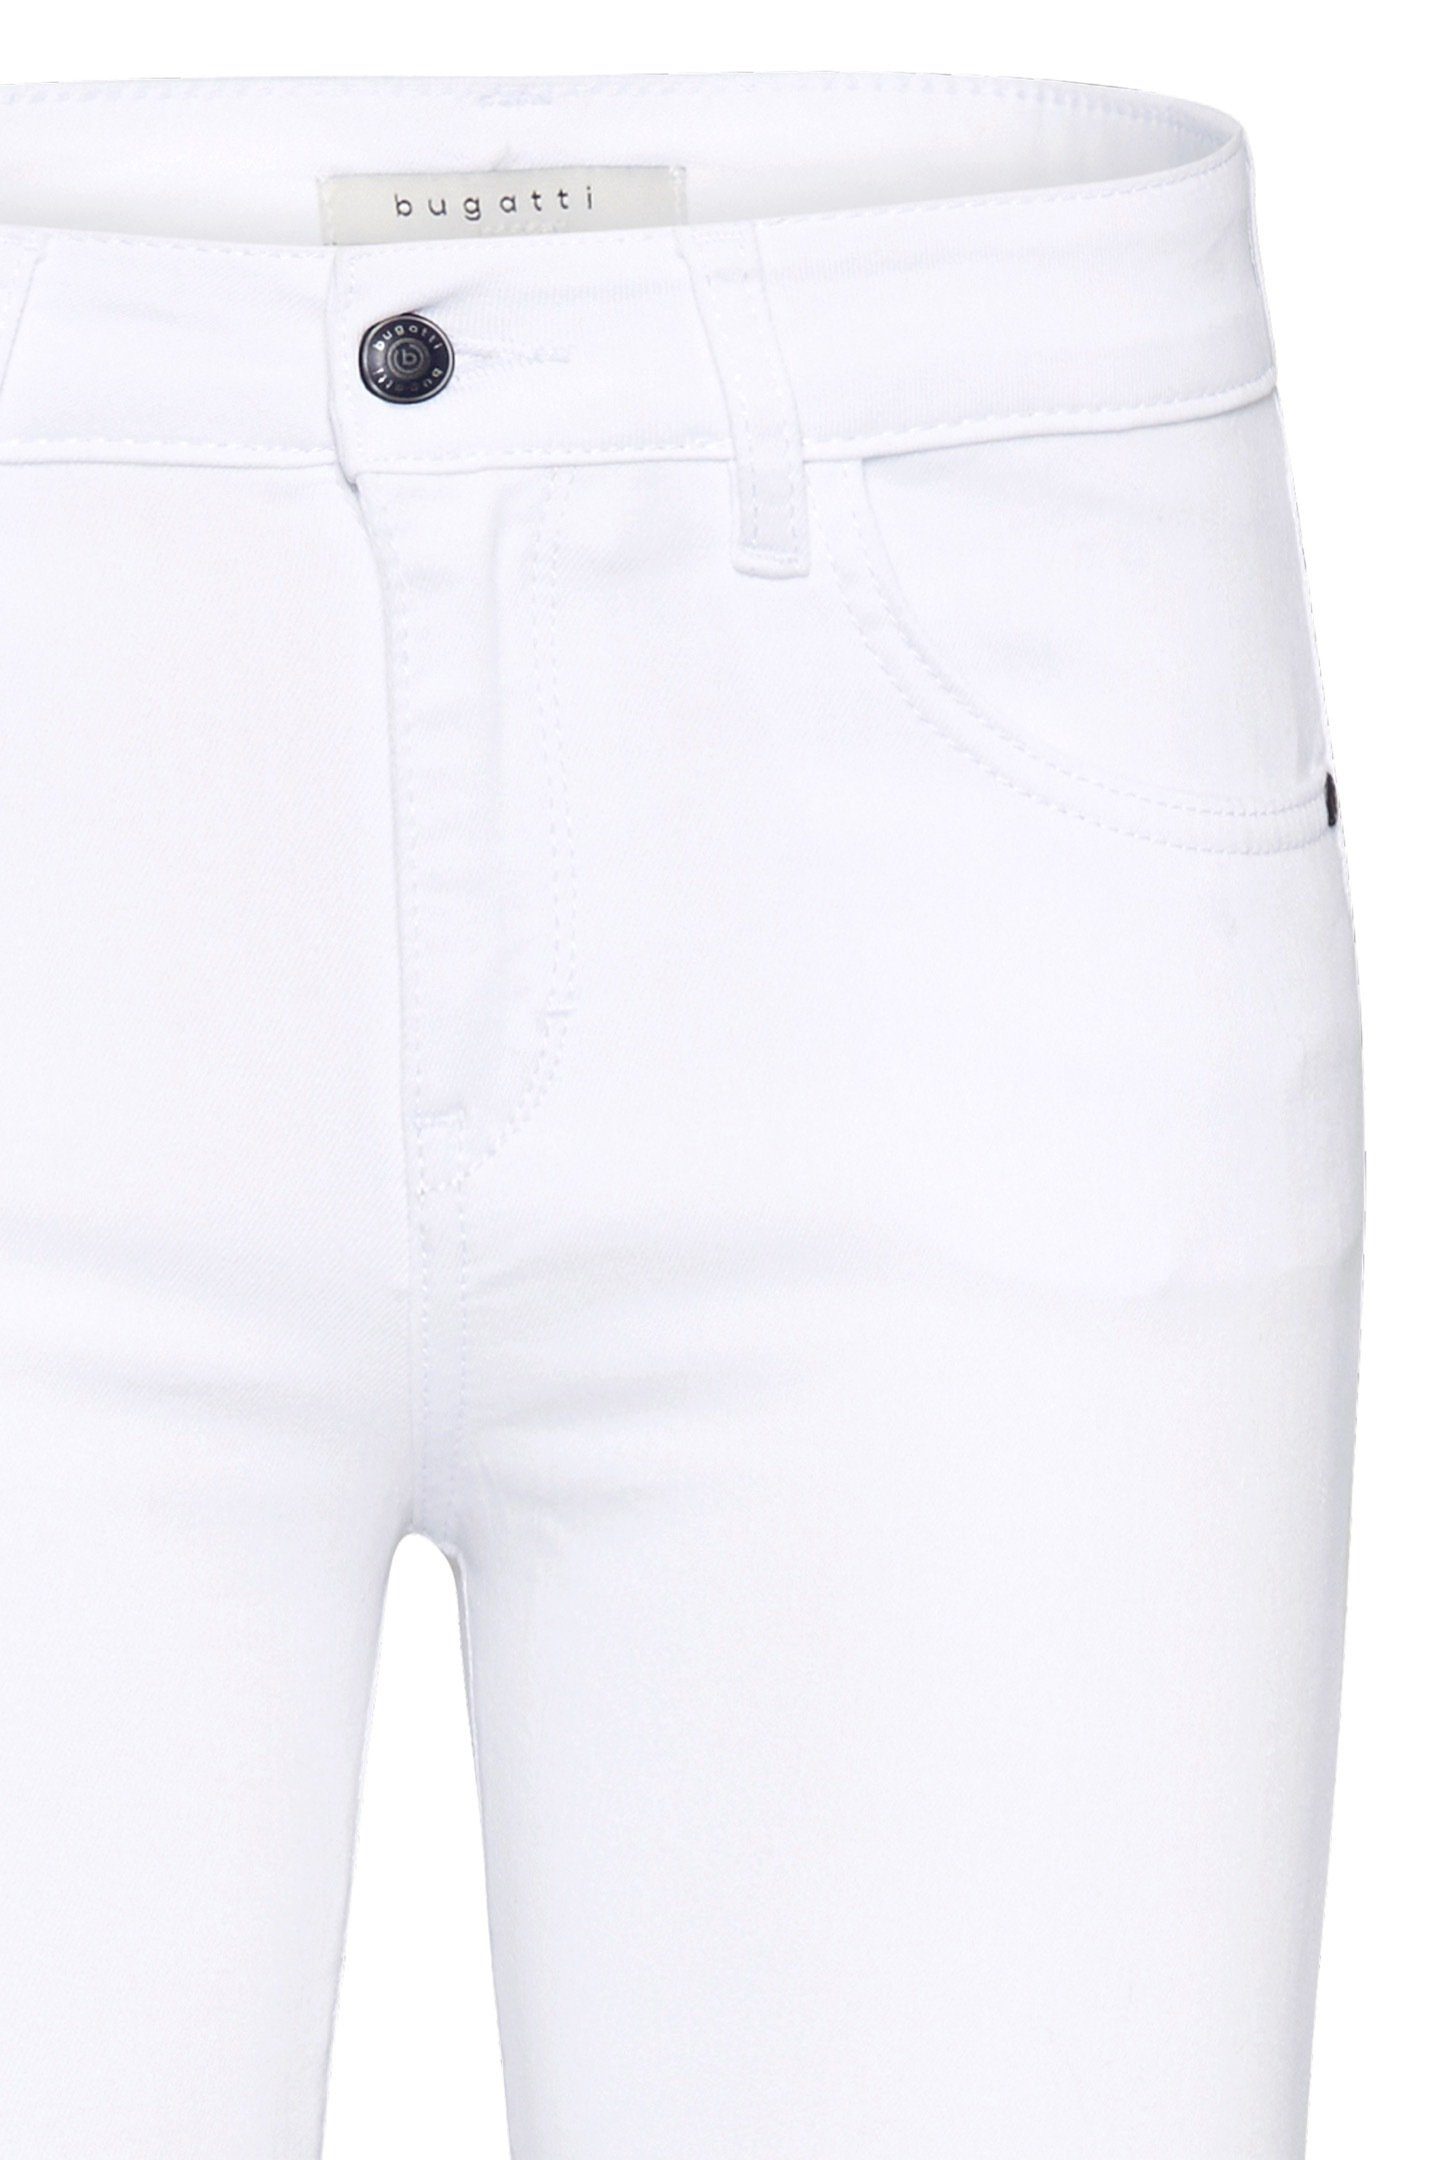 bugatti 5-Pocket-Jeans in Länge 7/8